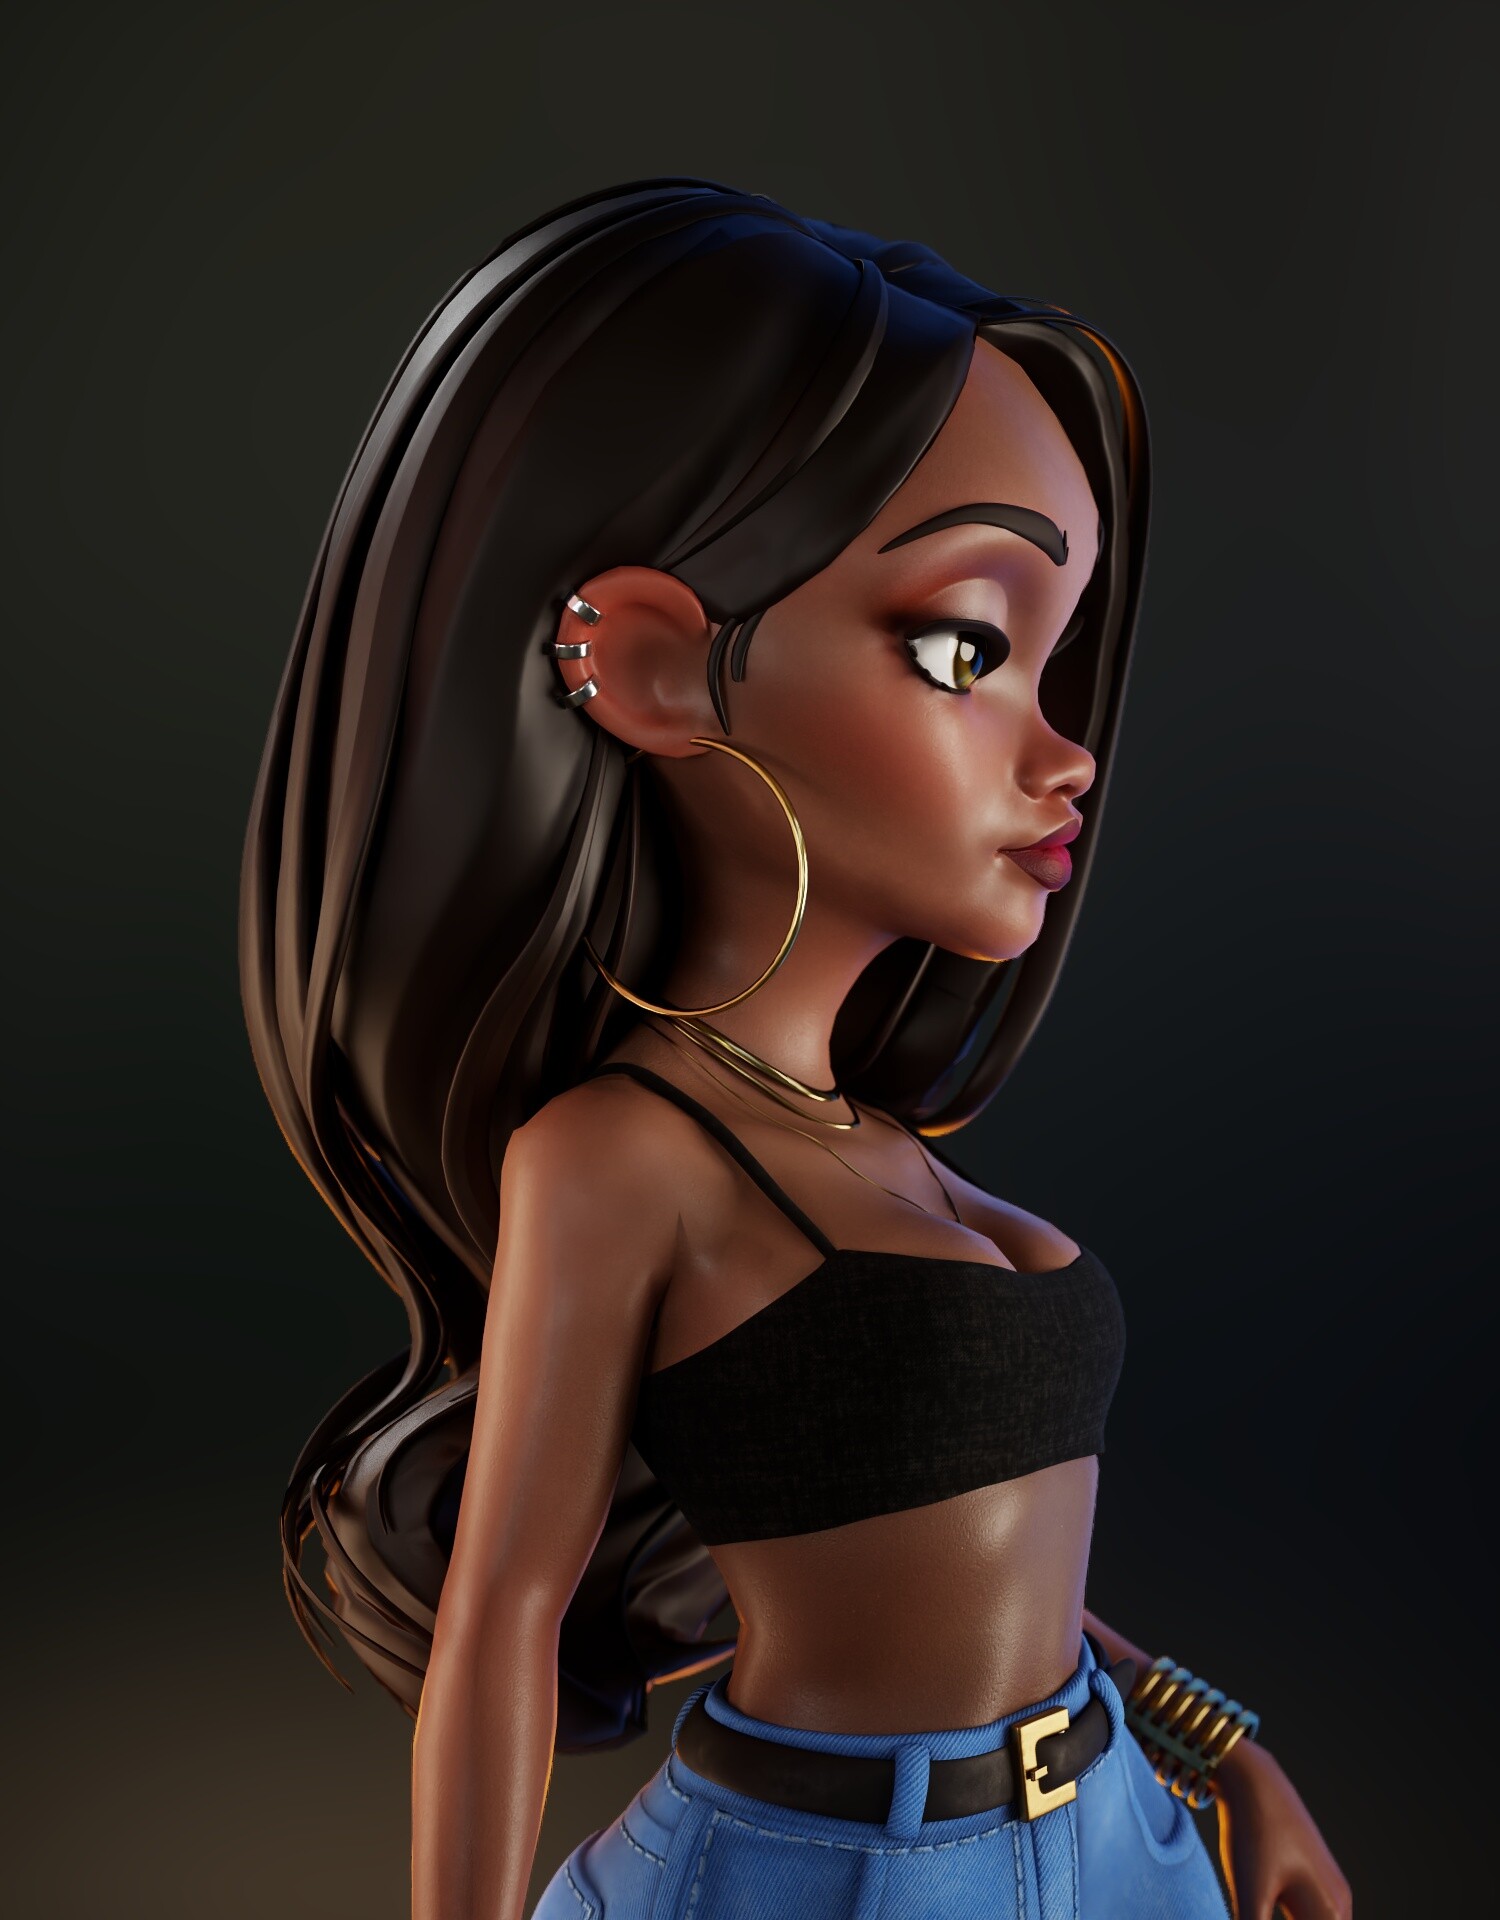 ArtStation - Rihanna stylized, game-ready